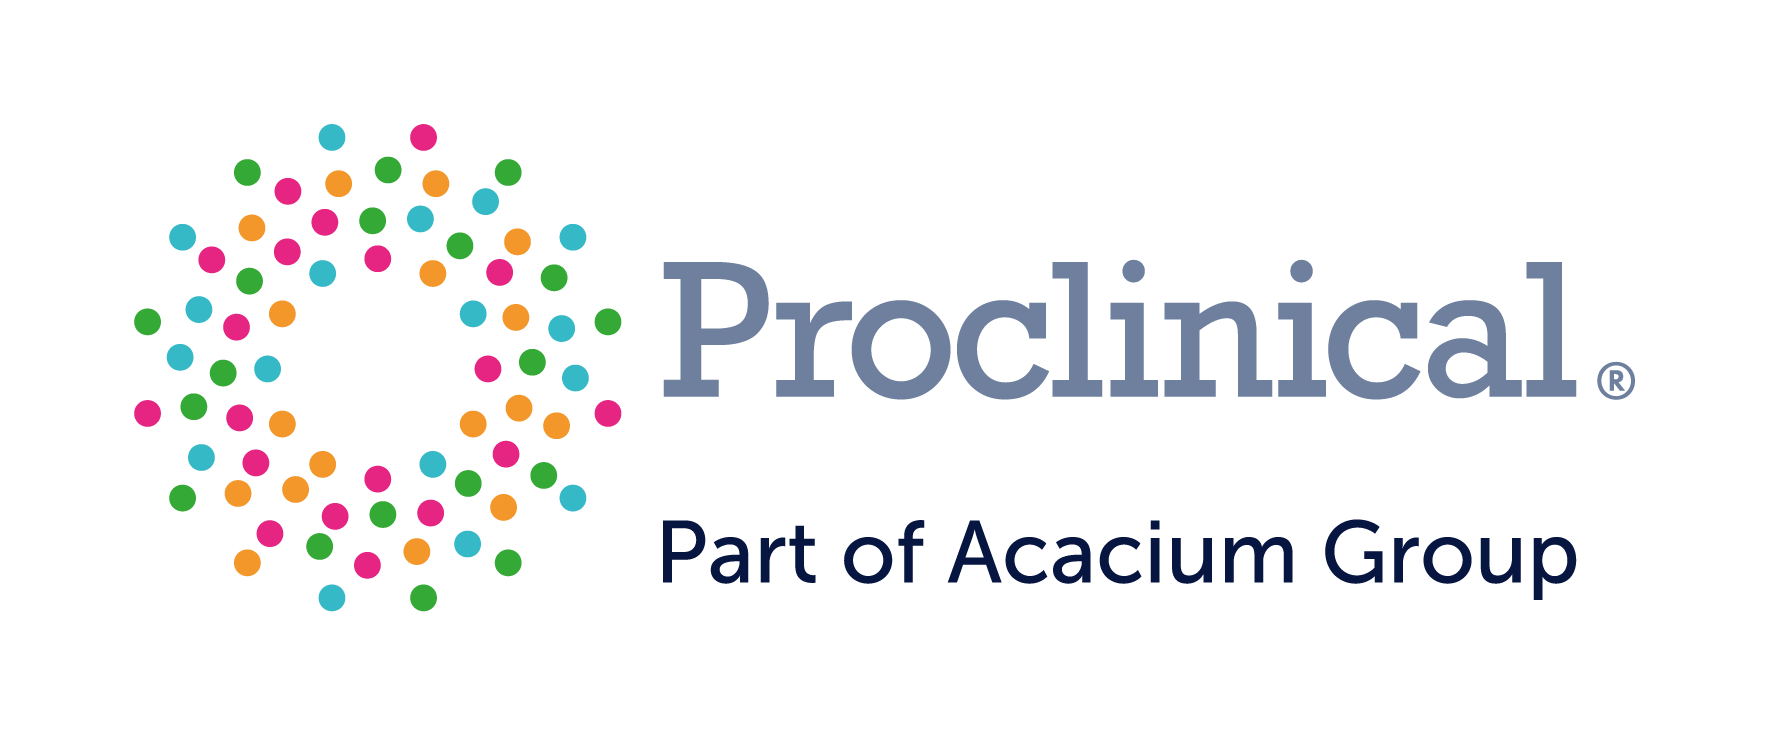 Group-Acacium-Trademark-logo-RGB